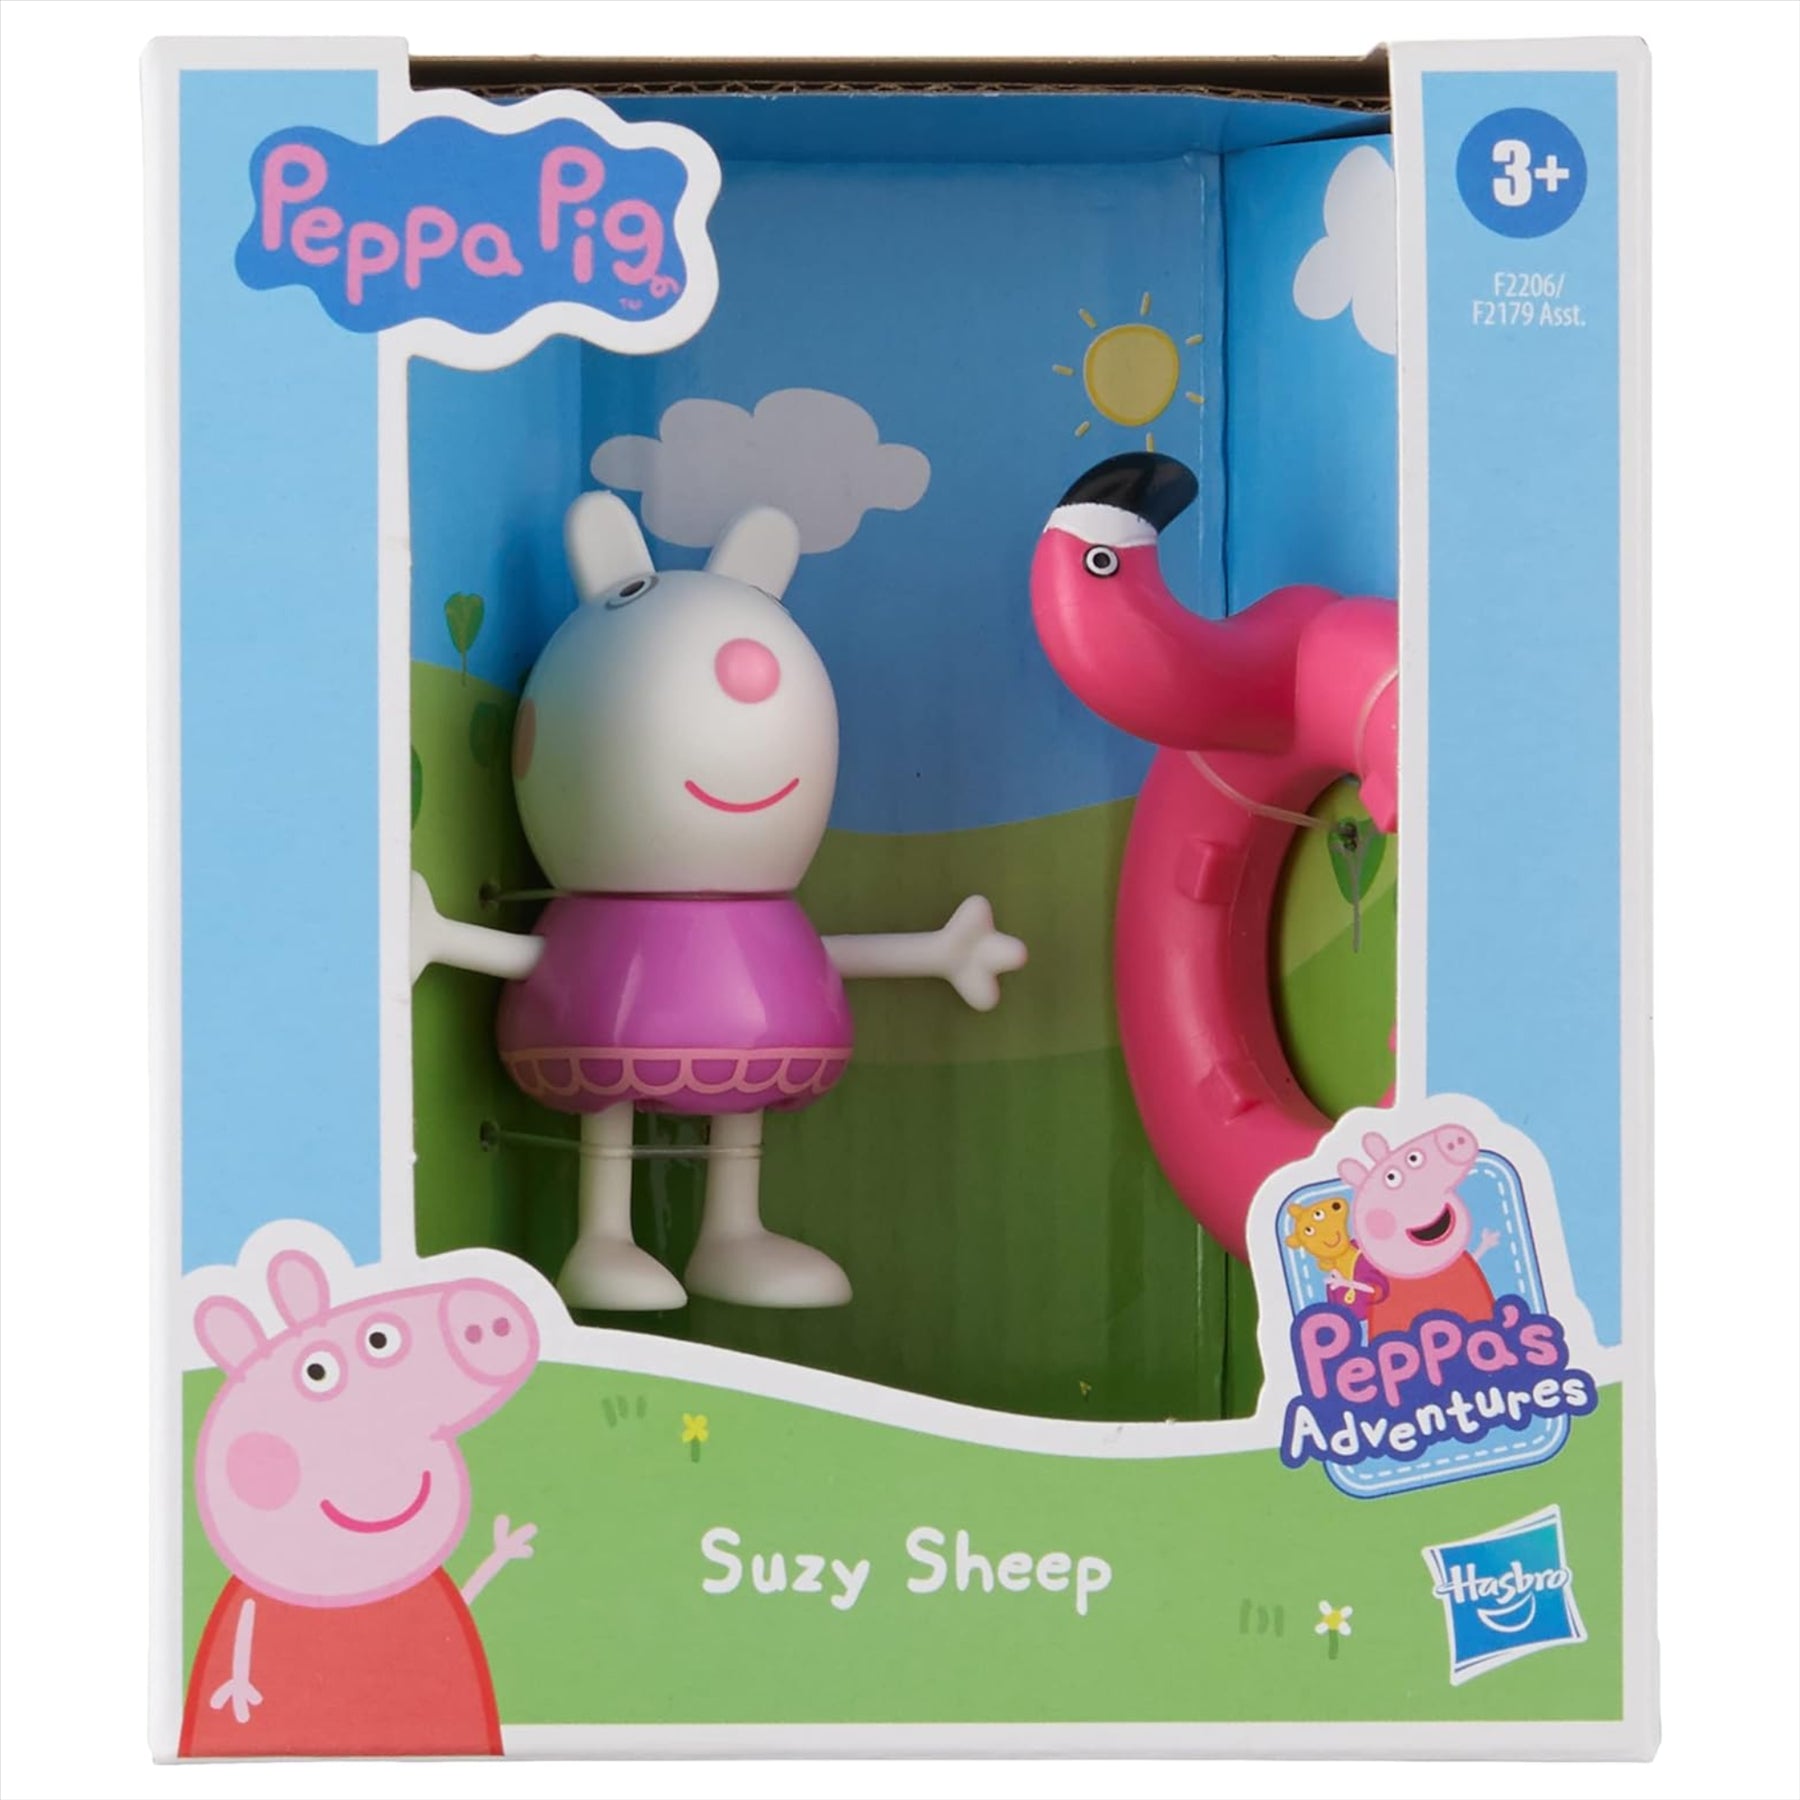 Peppa Pig - Peppa's Adventures Suzy Sheep Figure With Flamingo Float Toy - Toptoys2u